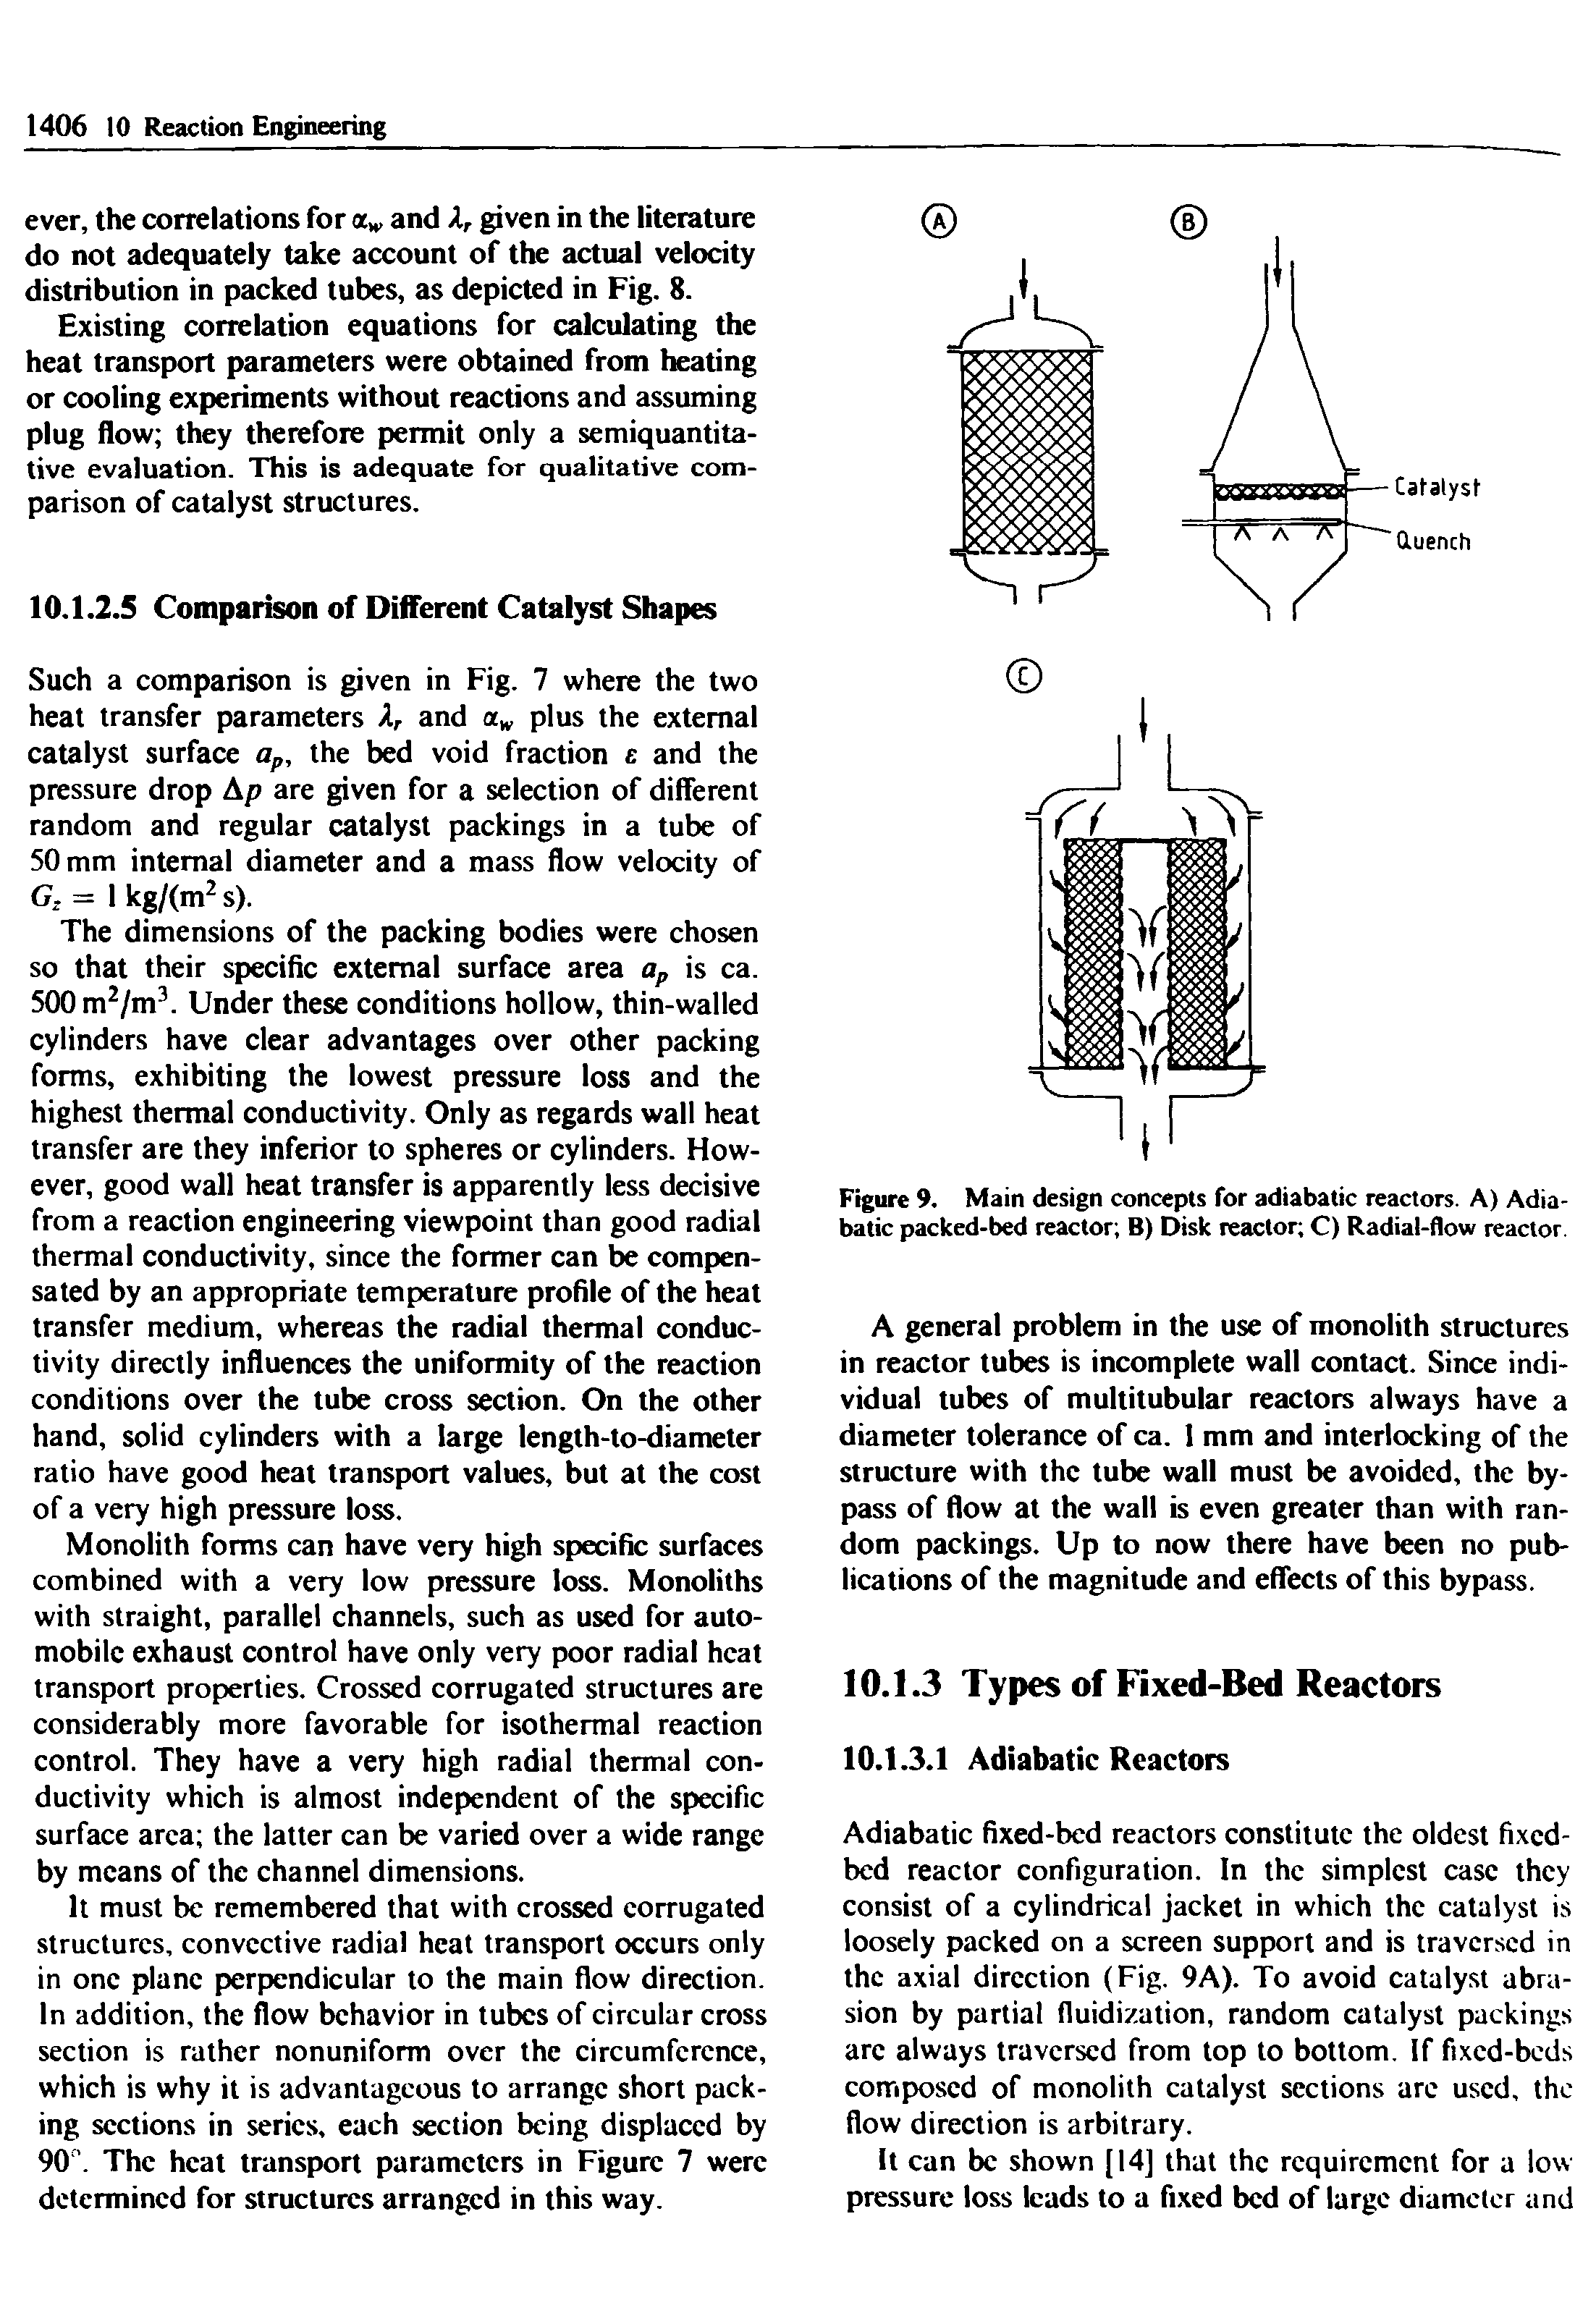 Figure 9. Main design concepts for adiabatic reactors. A) Adiabatic packed-bed reactor B) Disk reactor C) Radial-flow reactor.